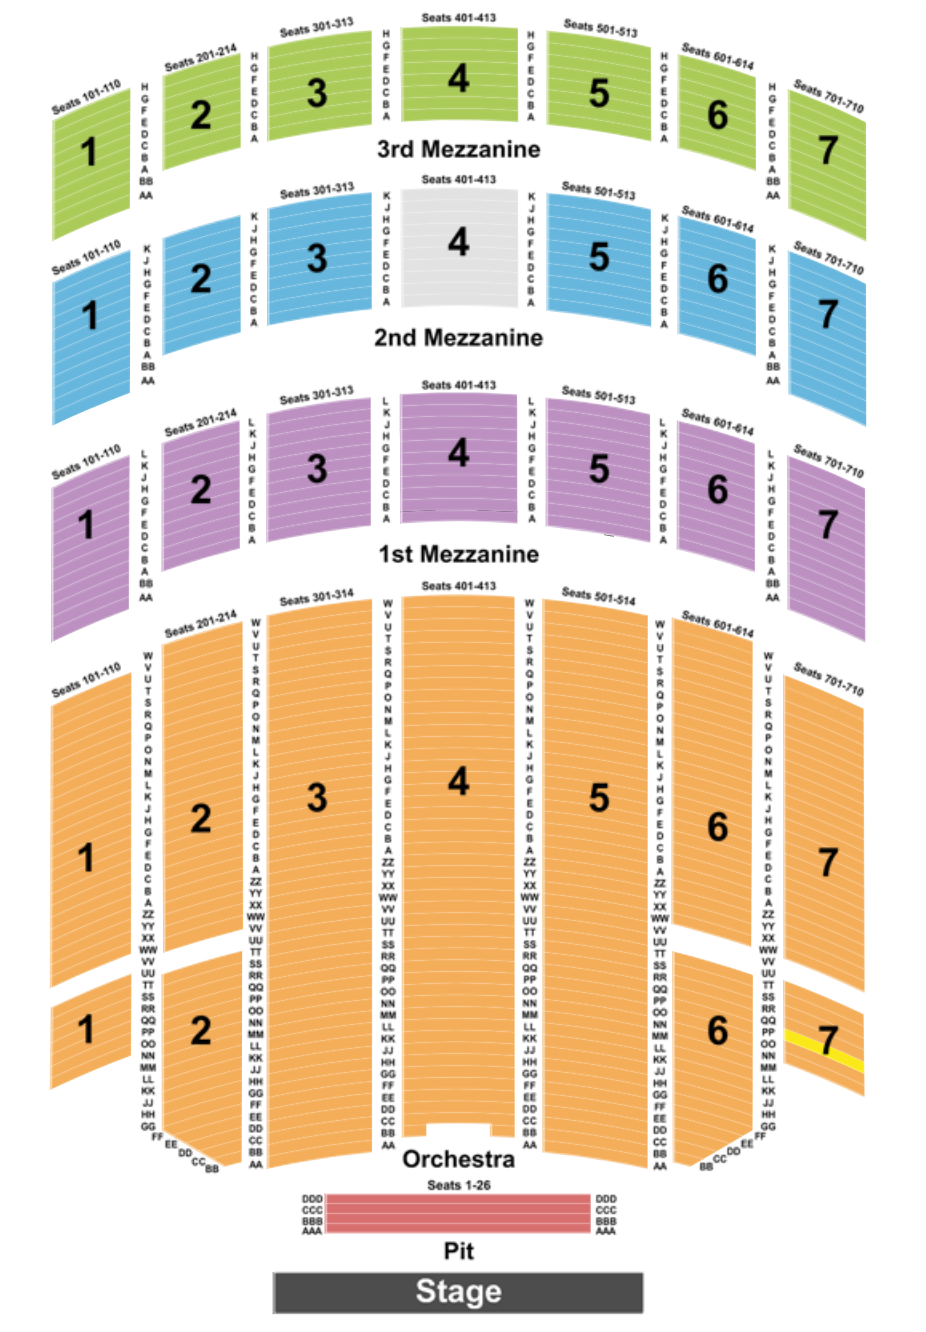 seating options at Radio City Music Hall